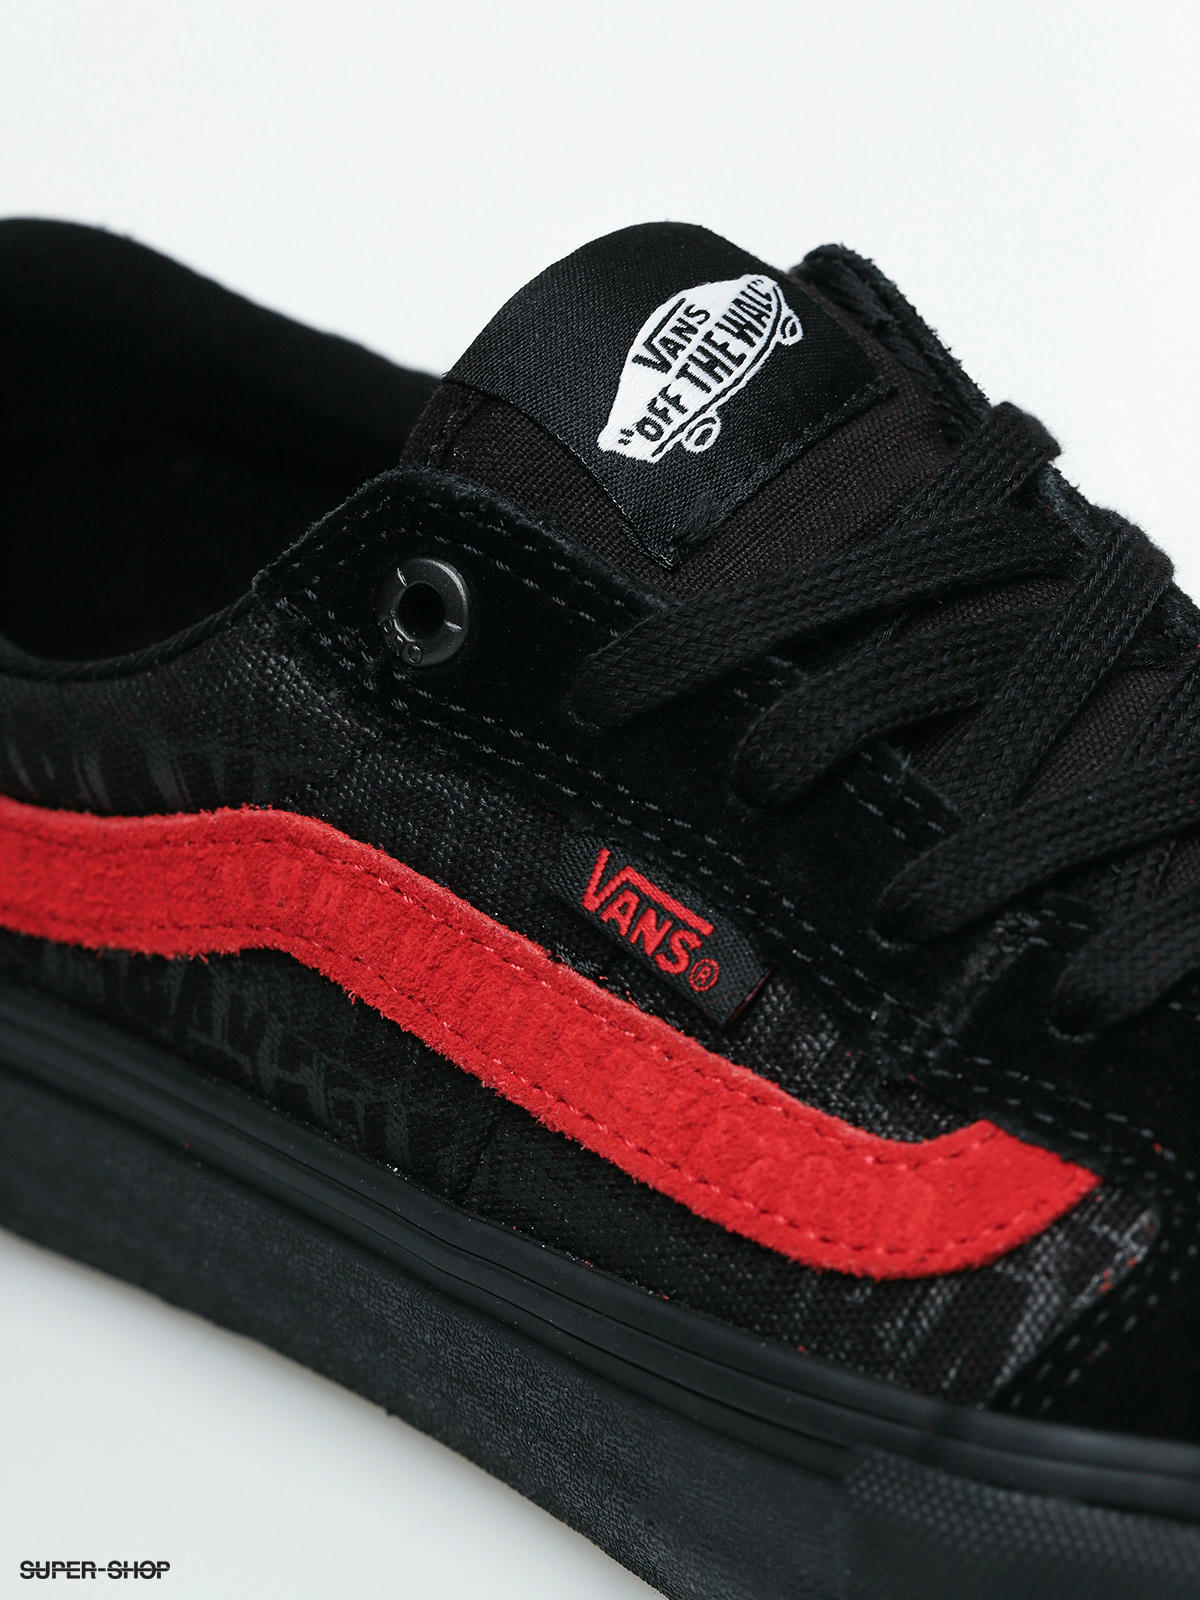 Vans Style 112 Pro Shoes (black/black/red)